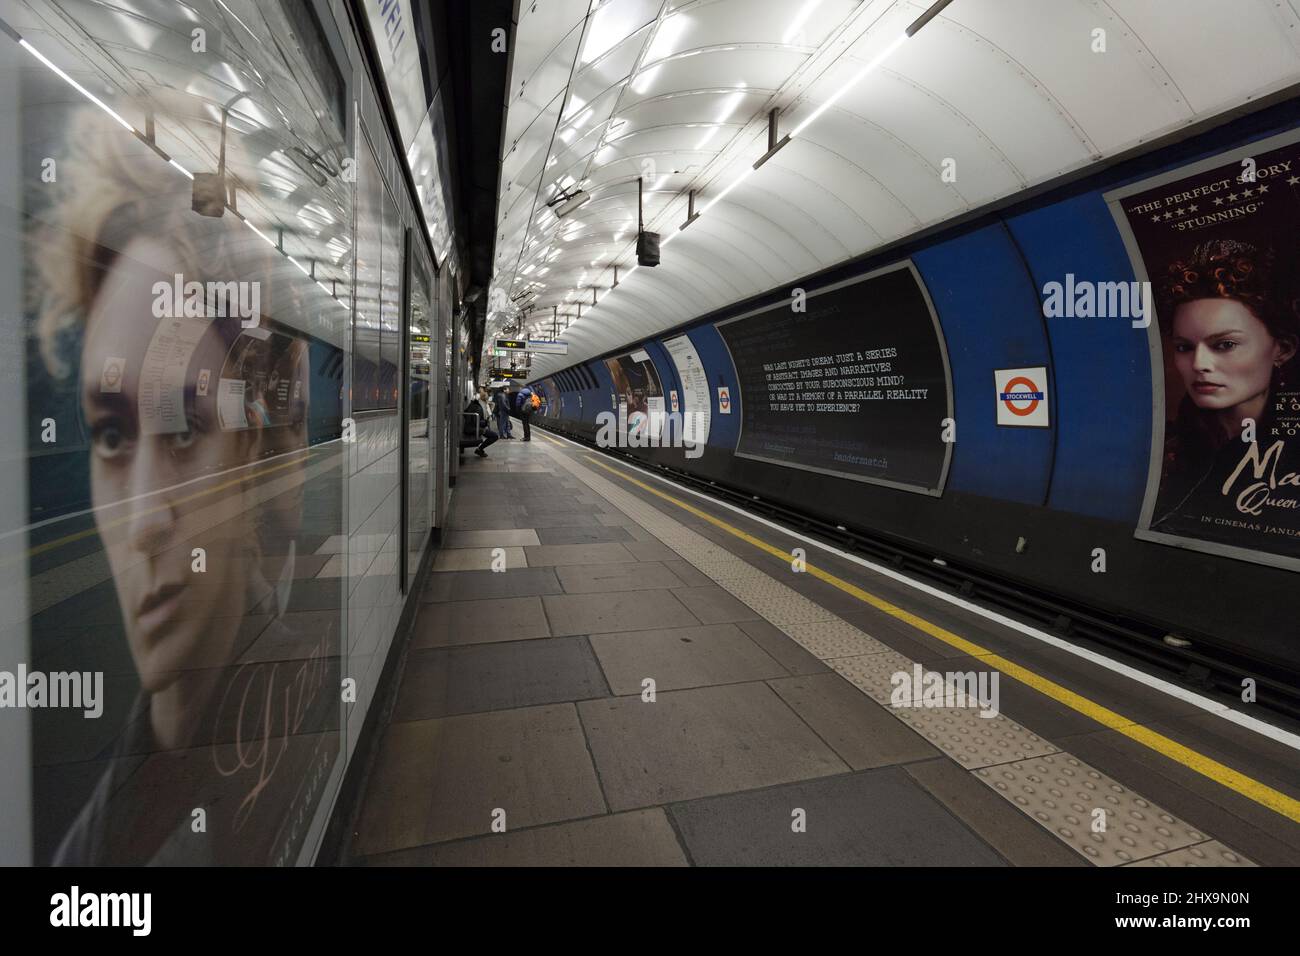 Stockwell London Underground station, Northern line platform 2 Stock Photo